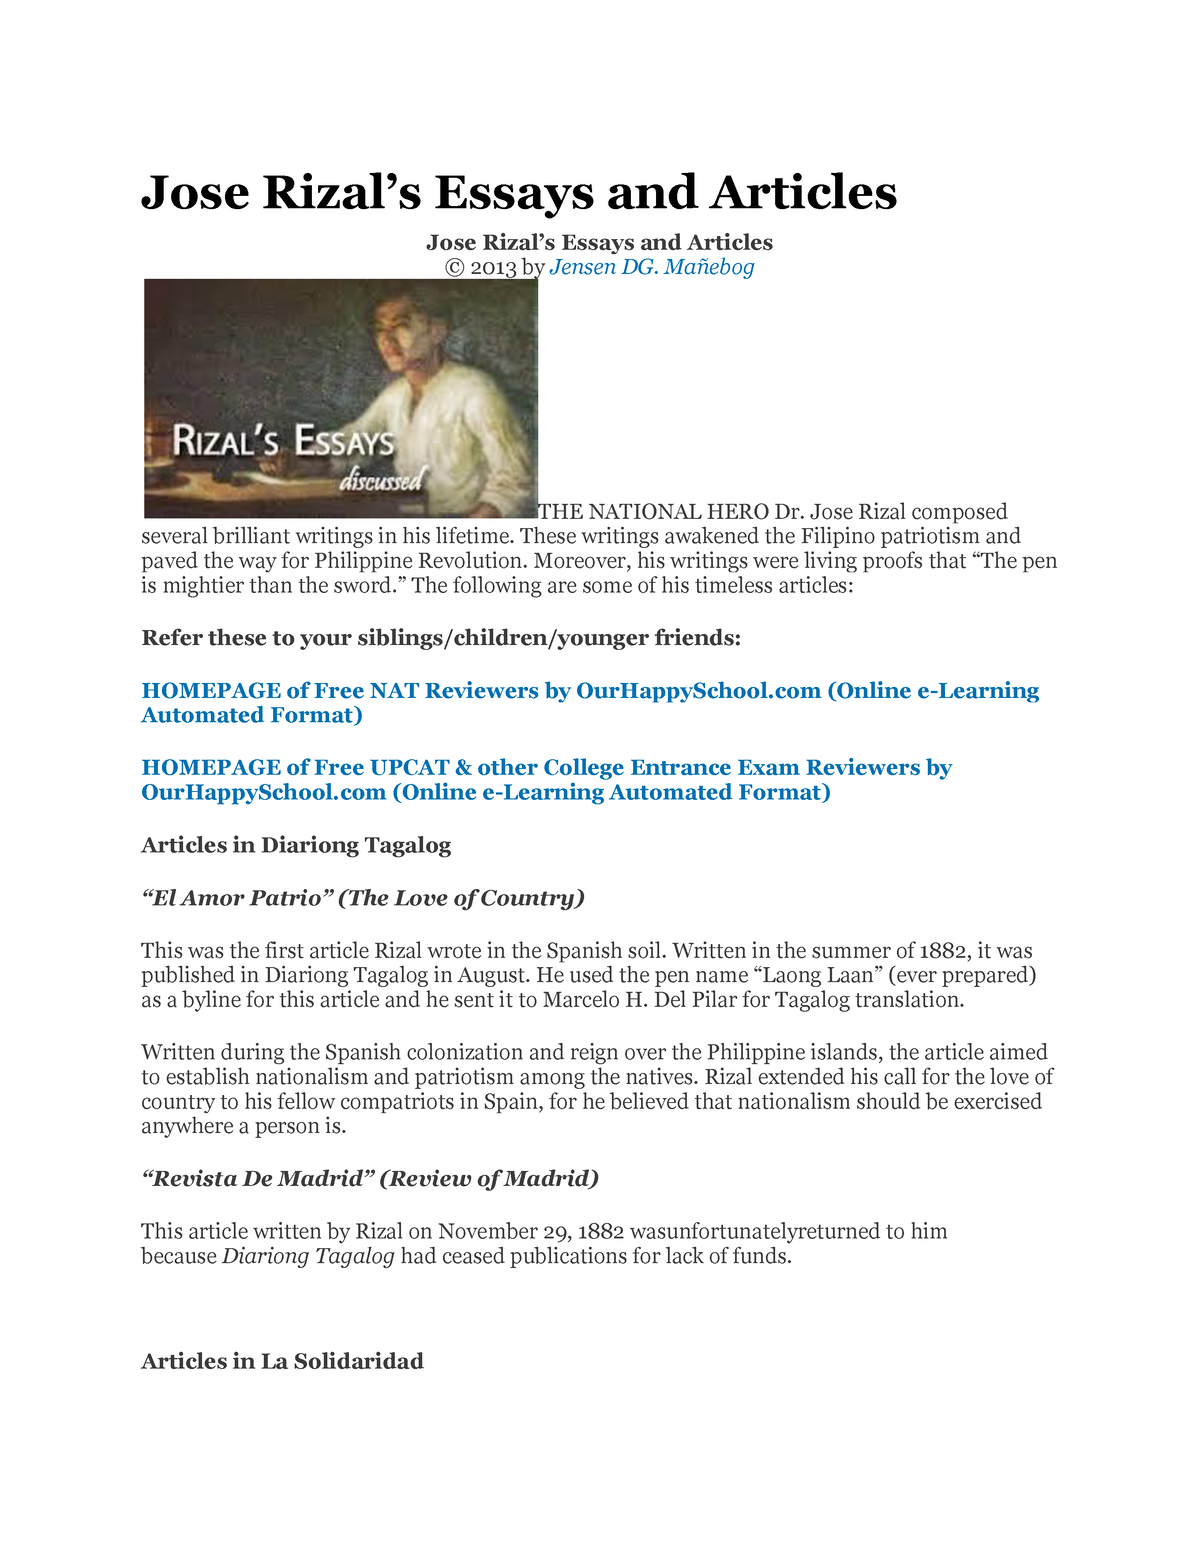 list of rizal's essays